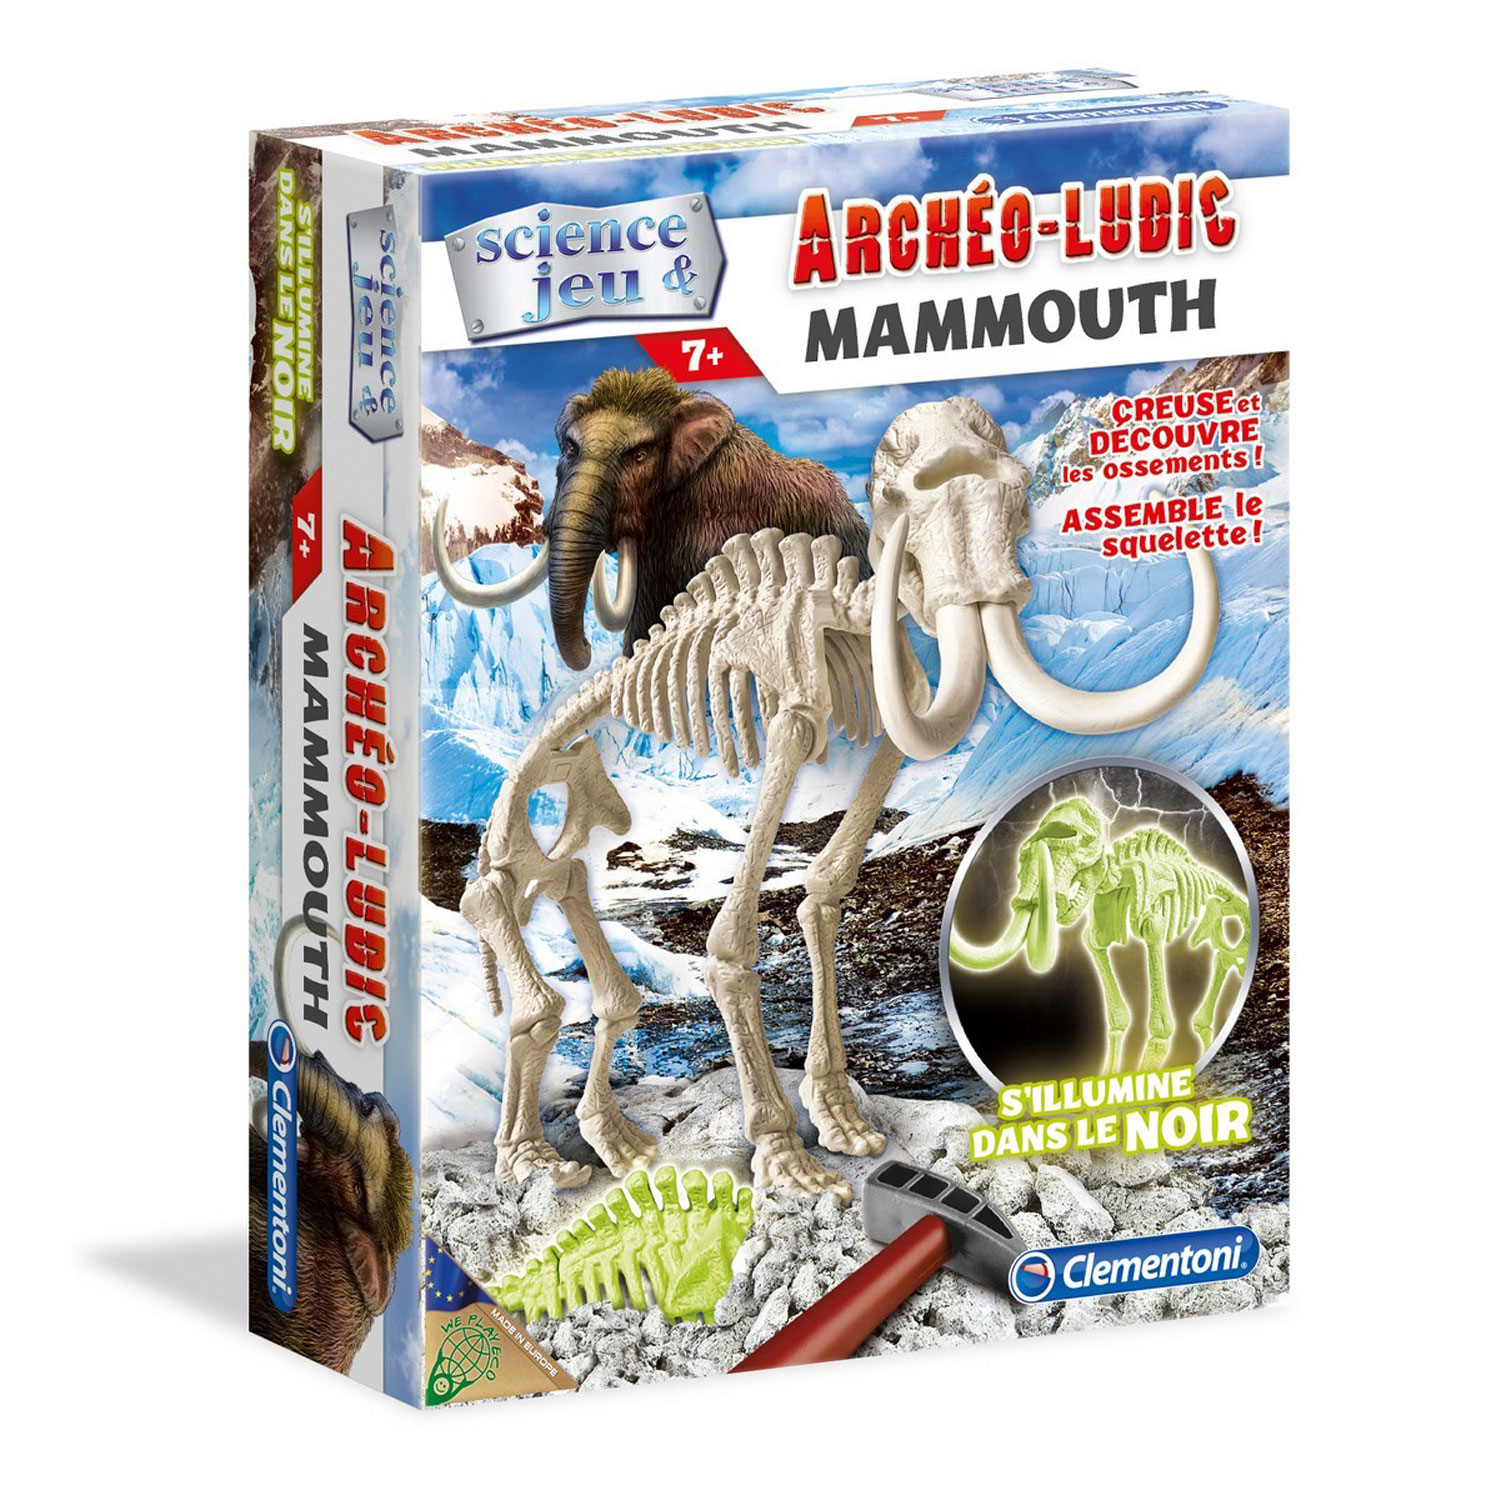 Science et jeu : Archéo-ludic : Mammouth phosphorescent